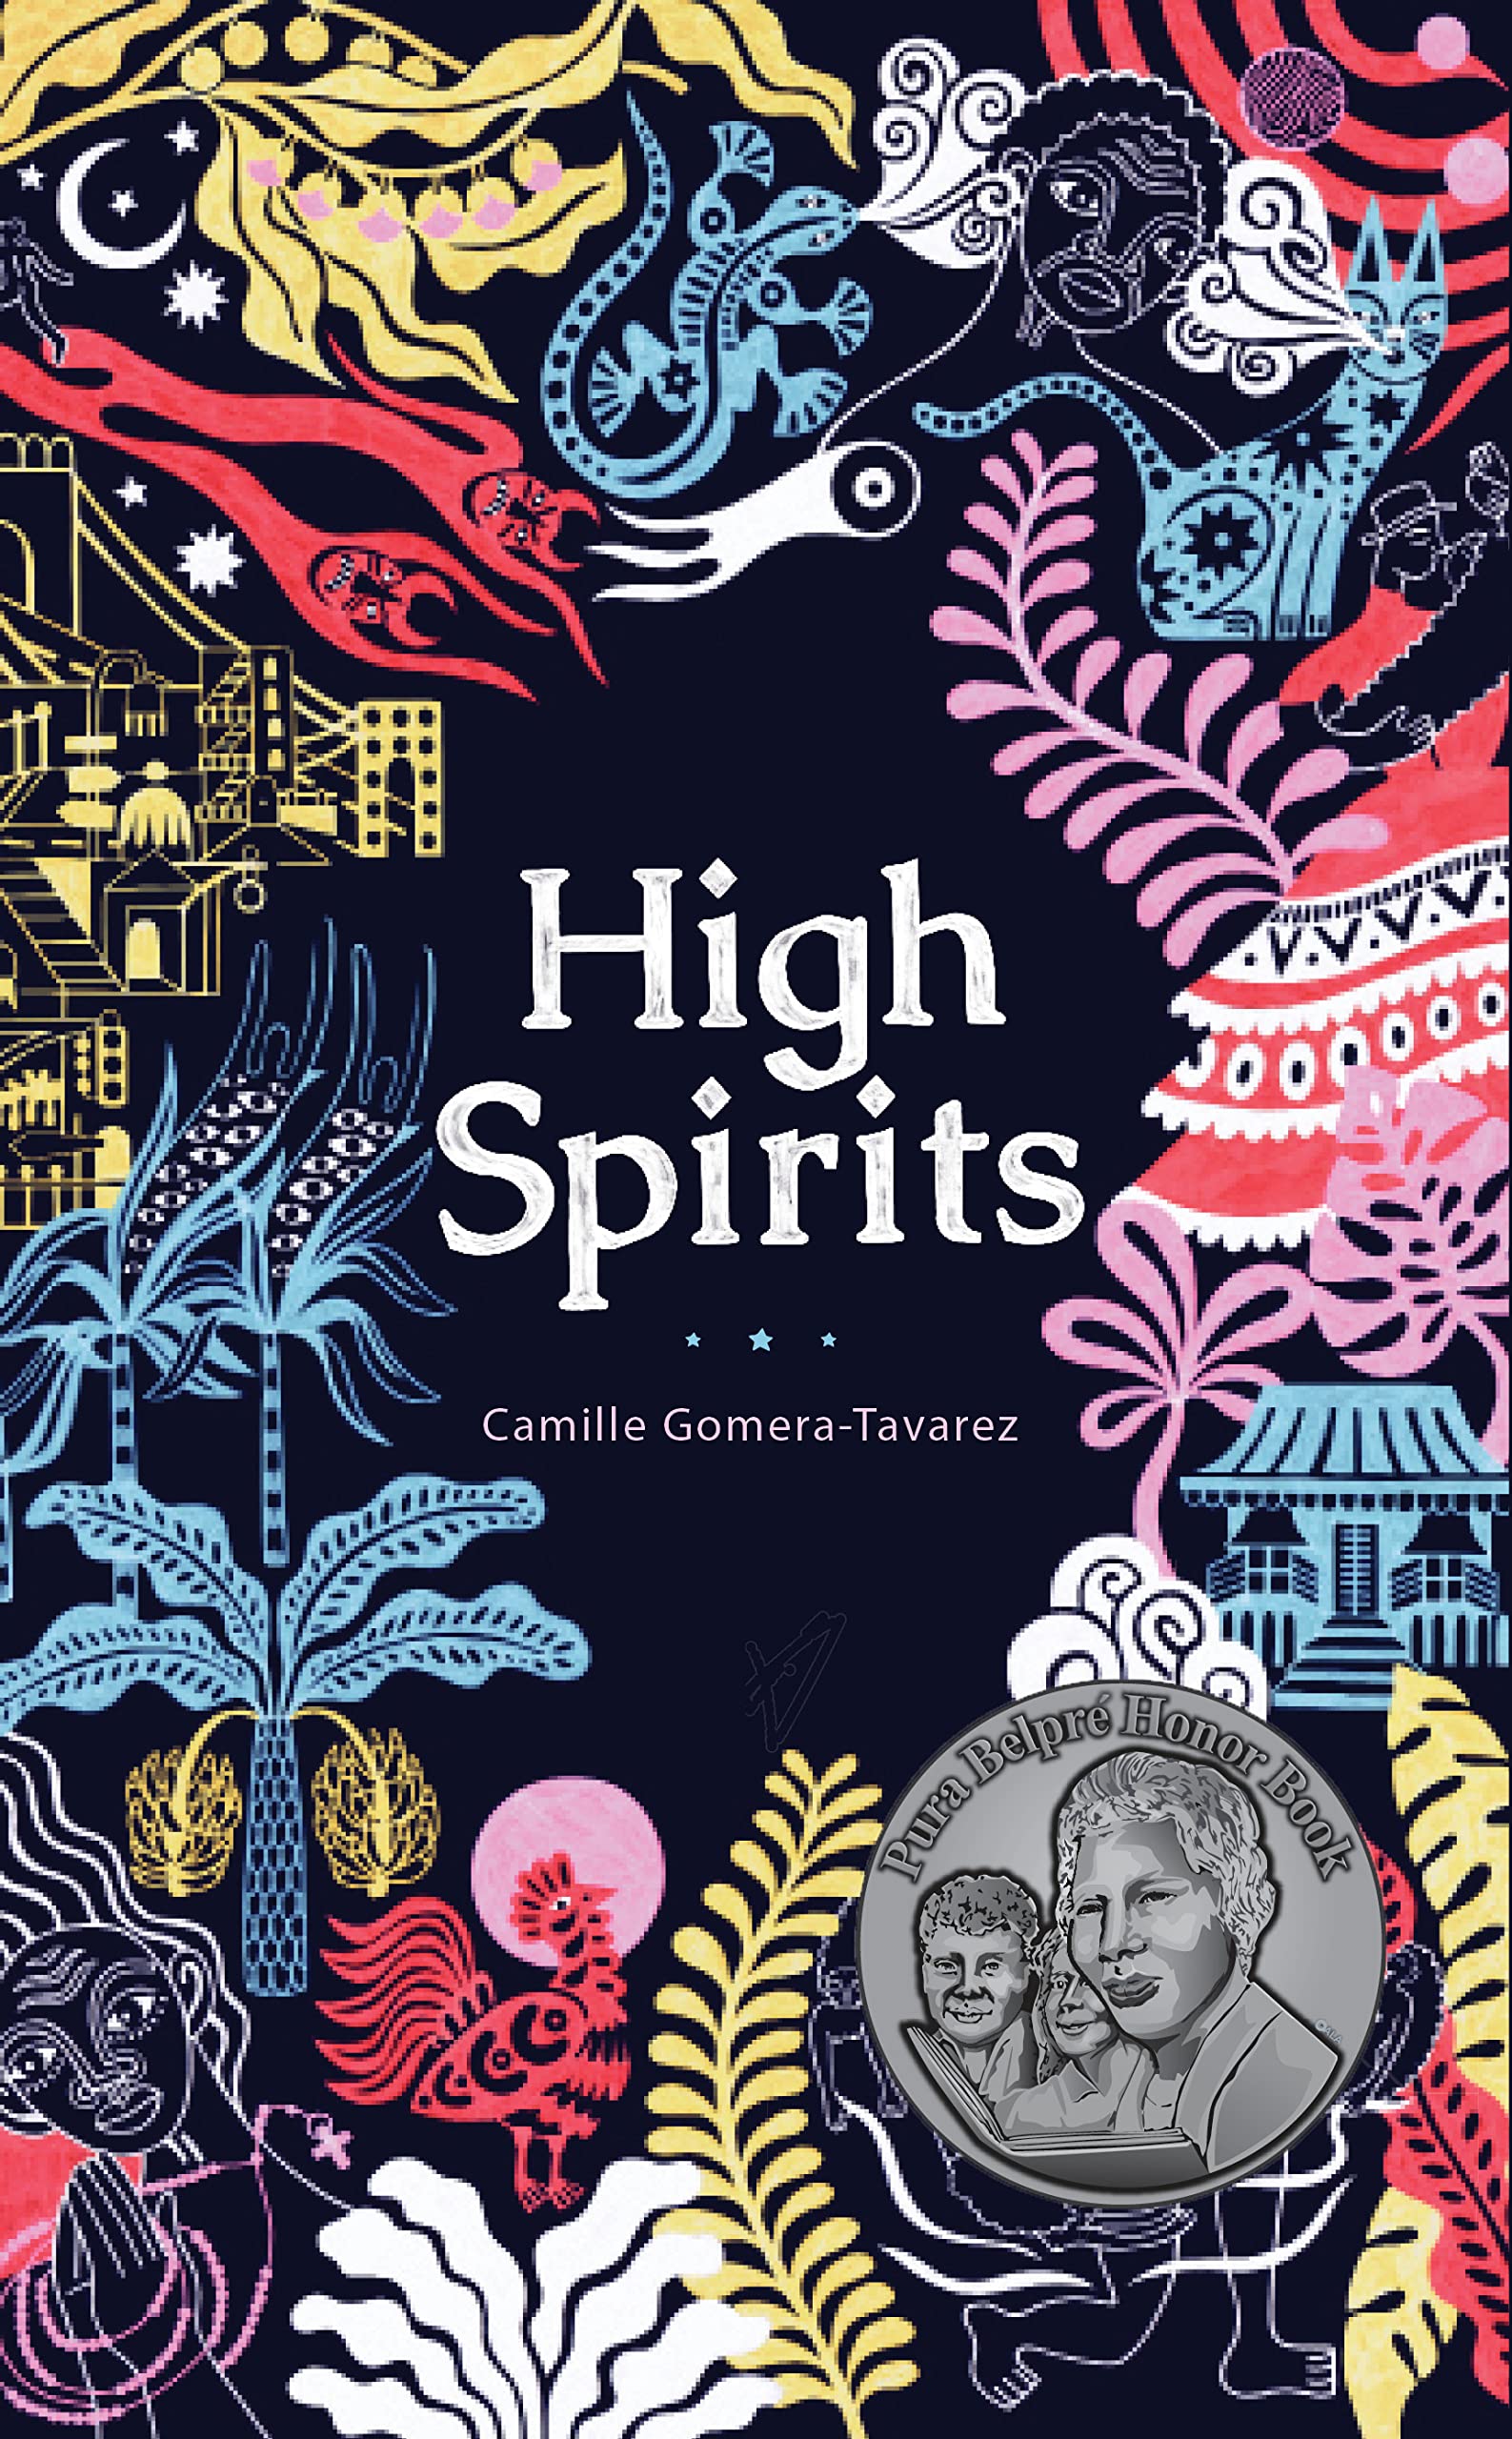 High Spirits Short Stories on Dominican Diaspora